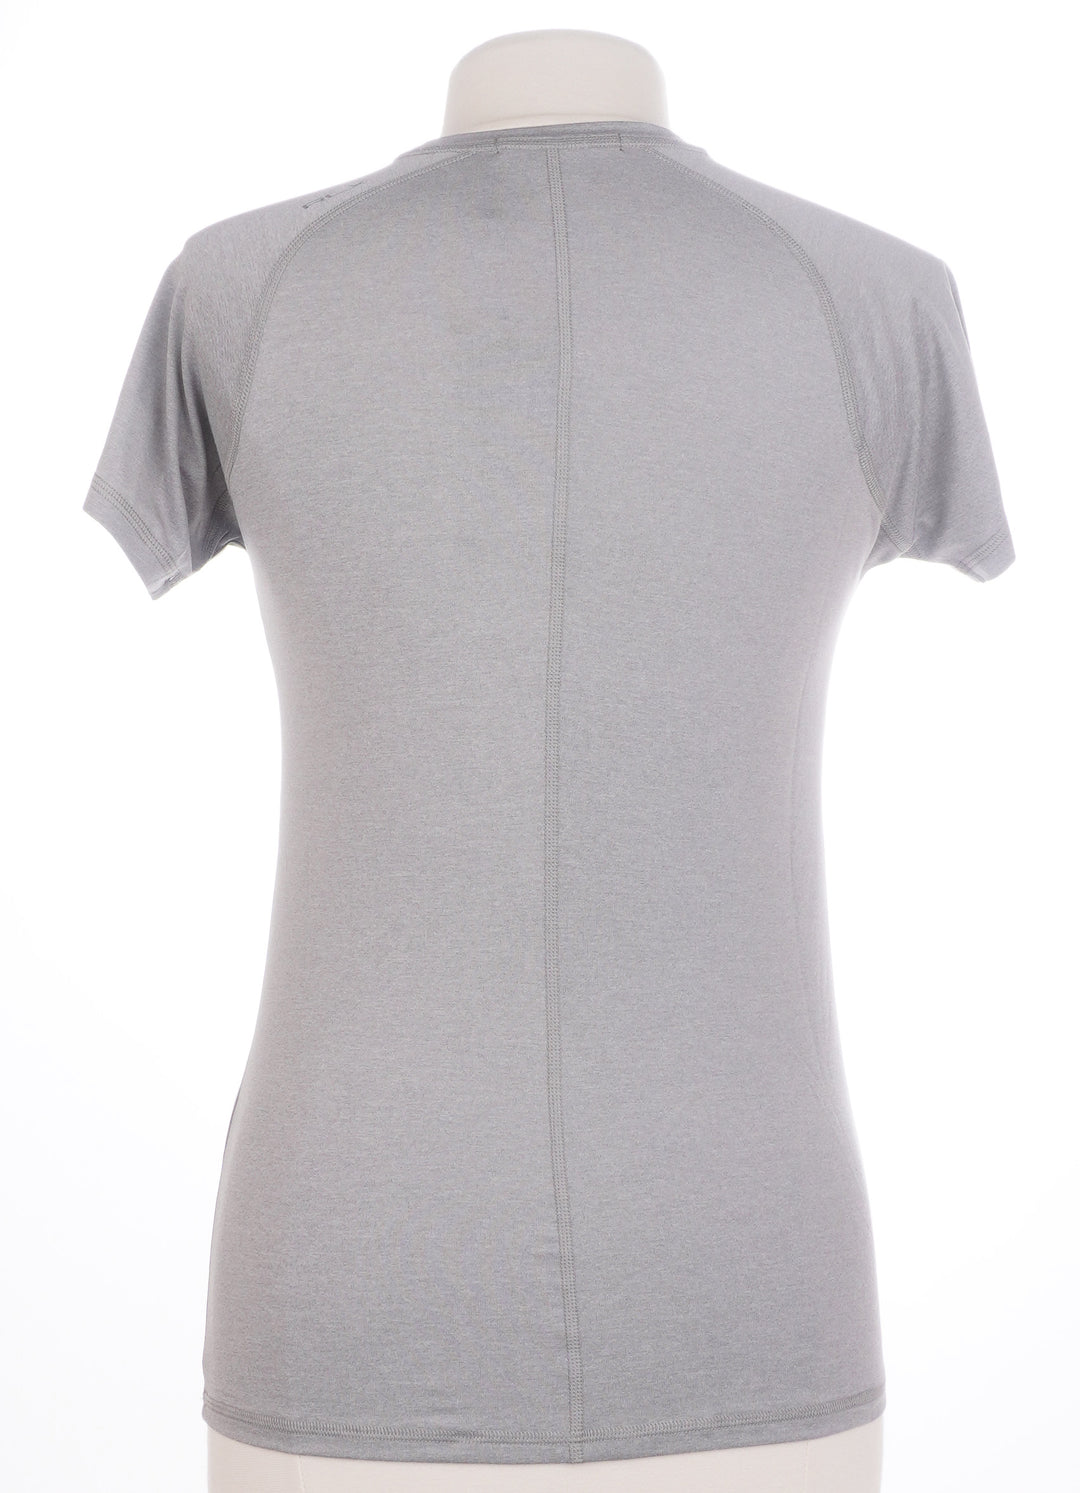 RLX Ralph Lauren Grey Short Sleeve Top - Size Small - Skorzie